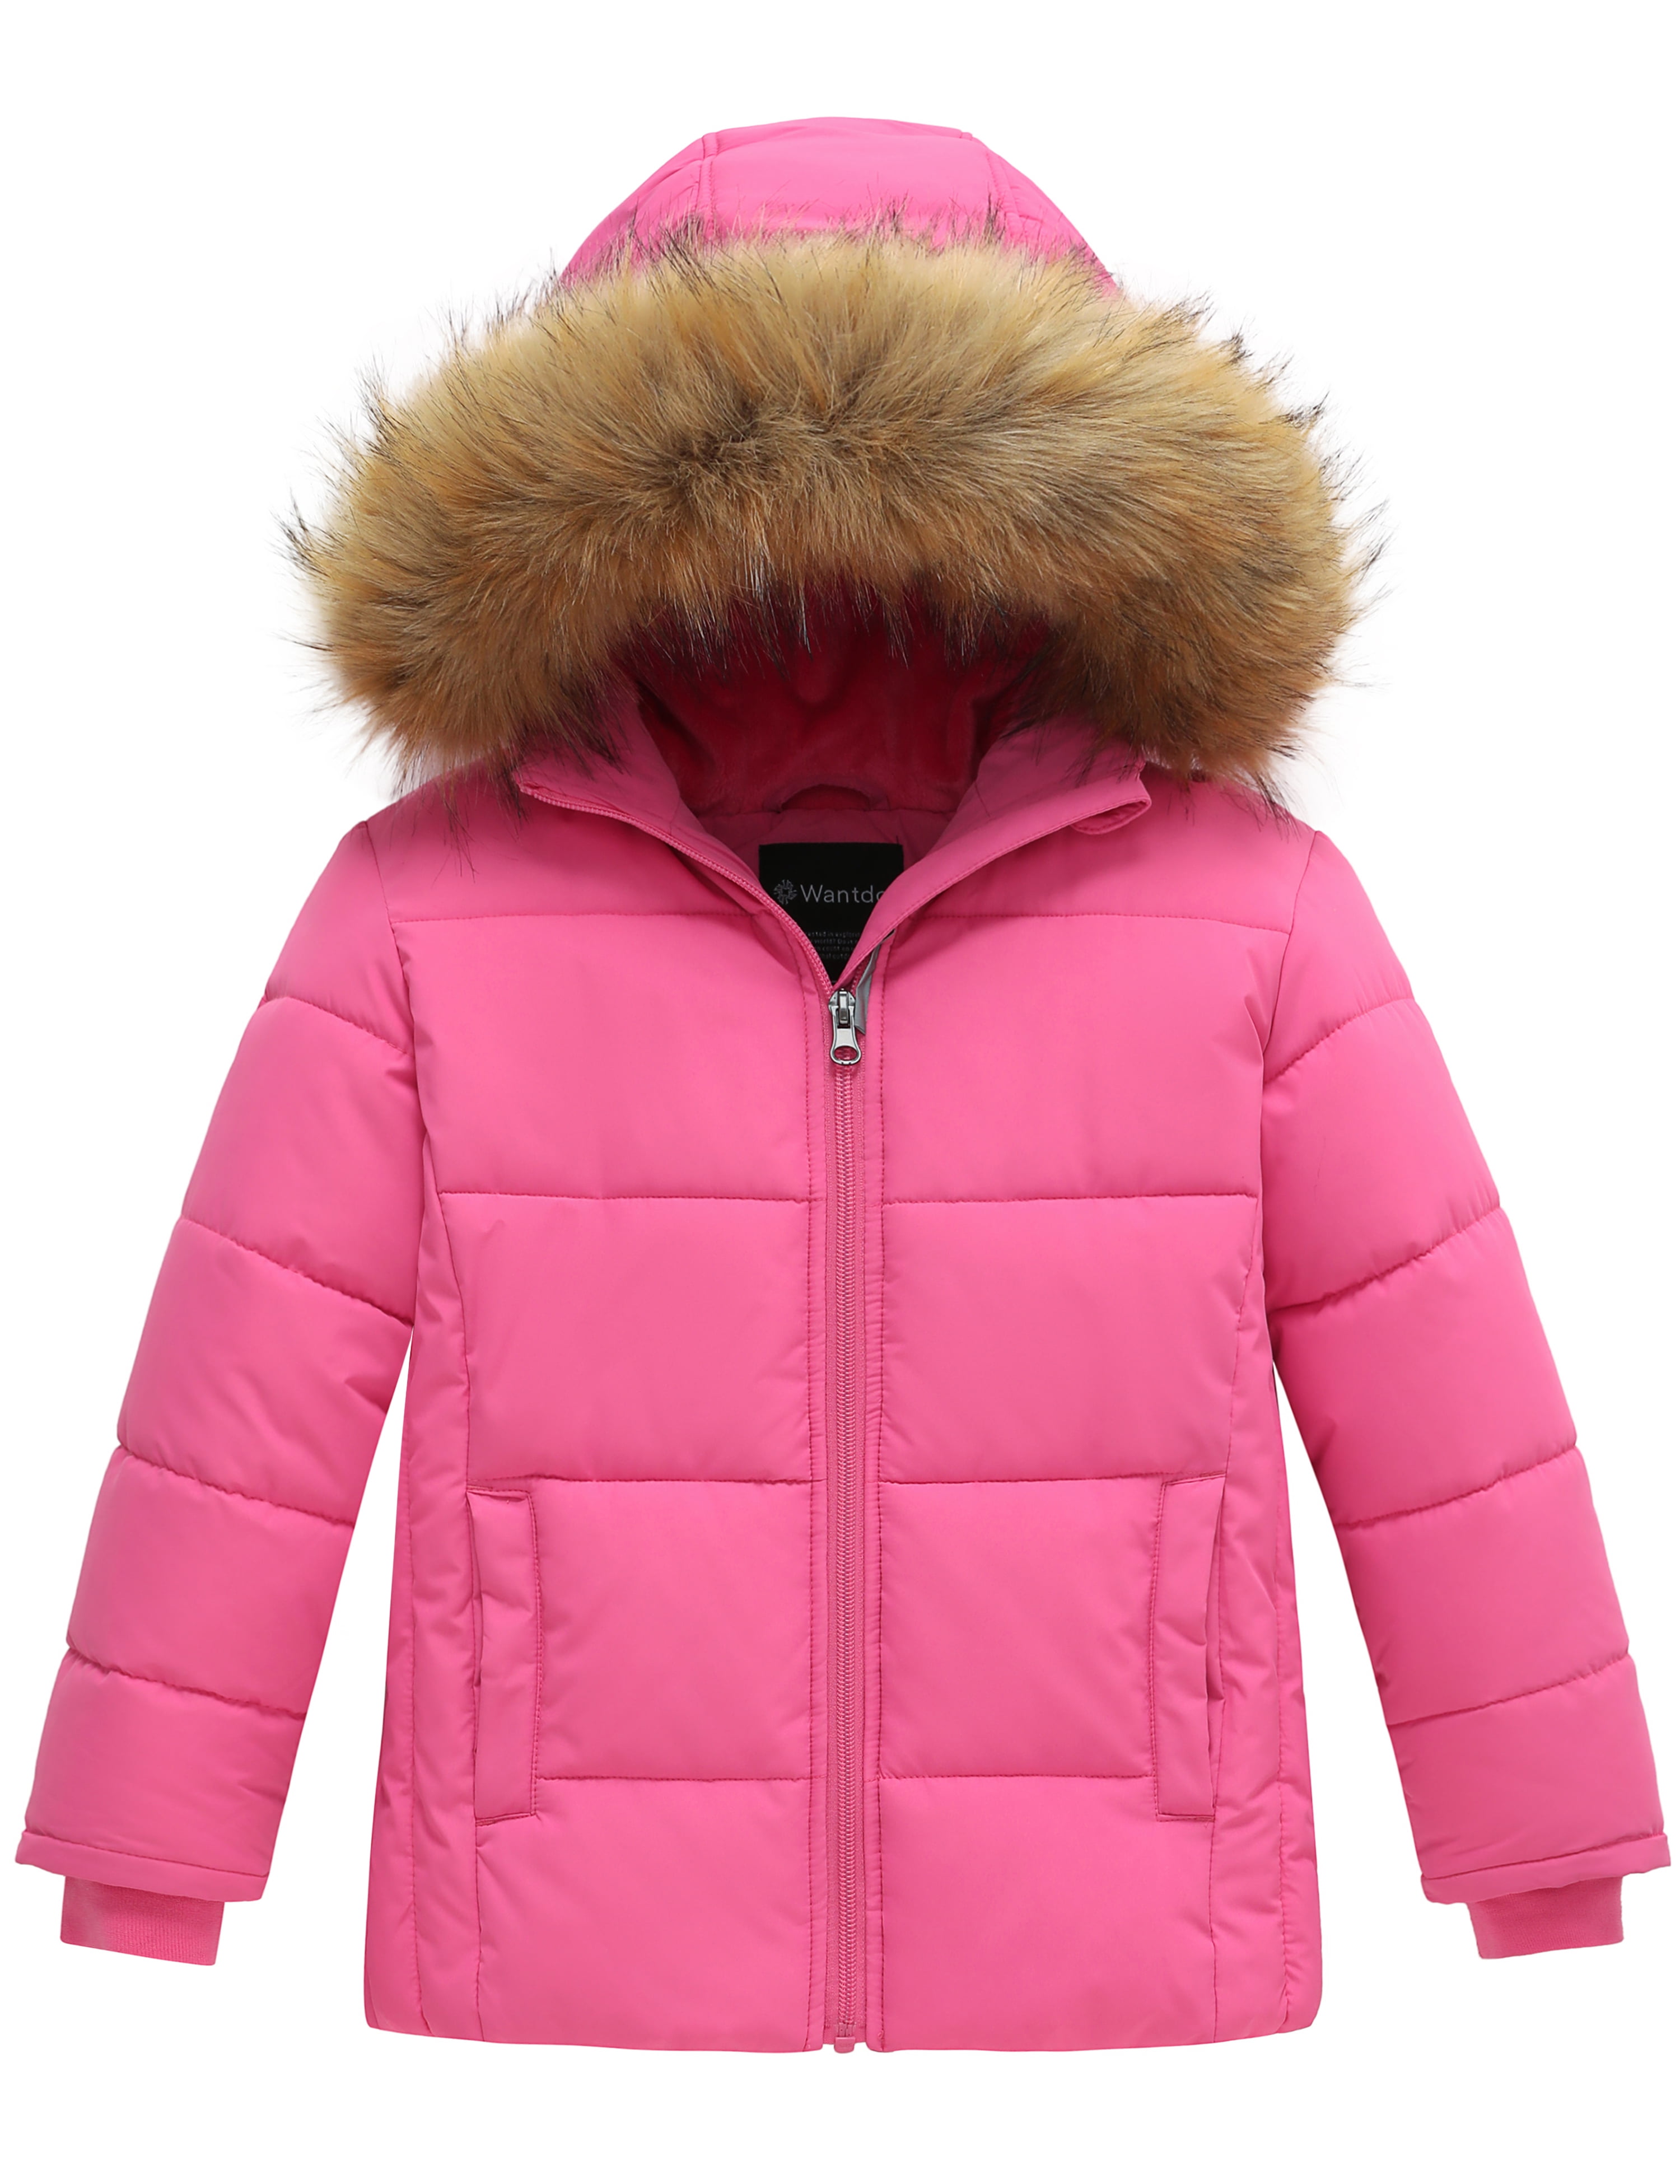 Wantdo Girls Winter Coat Windproof Warm Insulated Puffer Jacket with Hood 